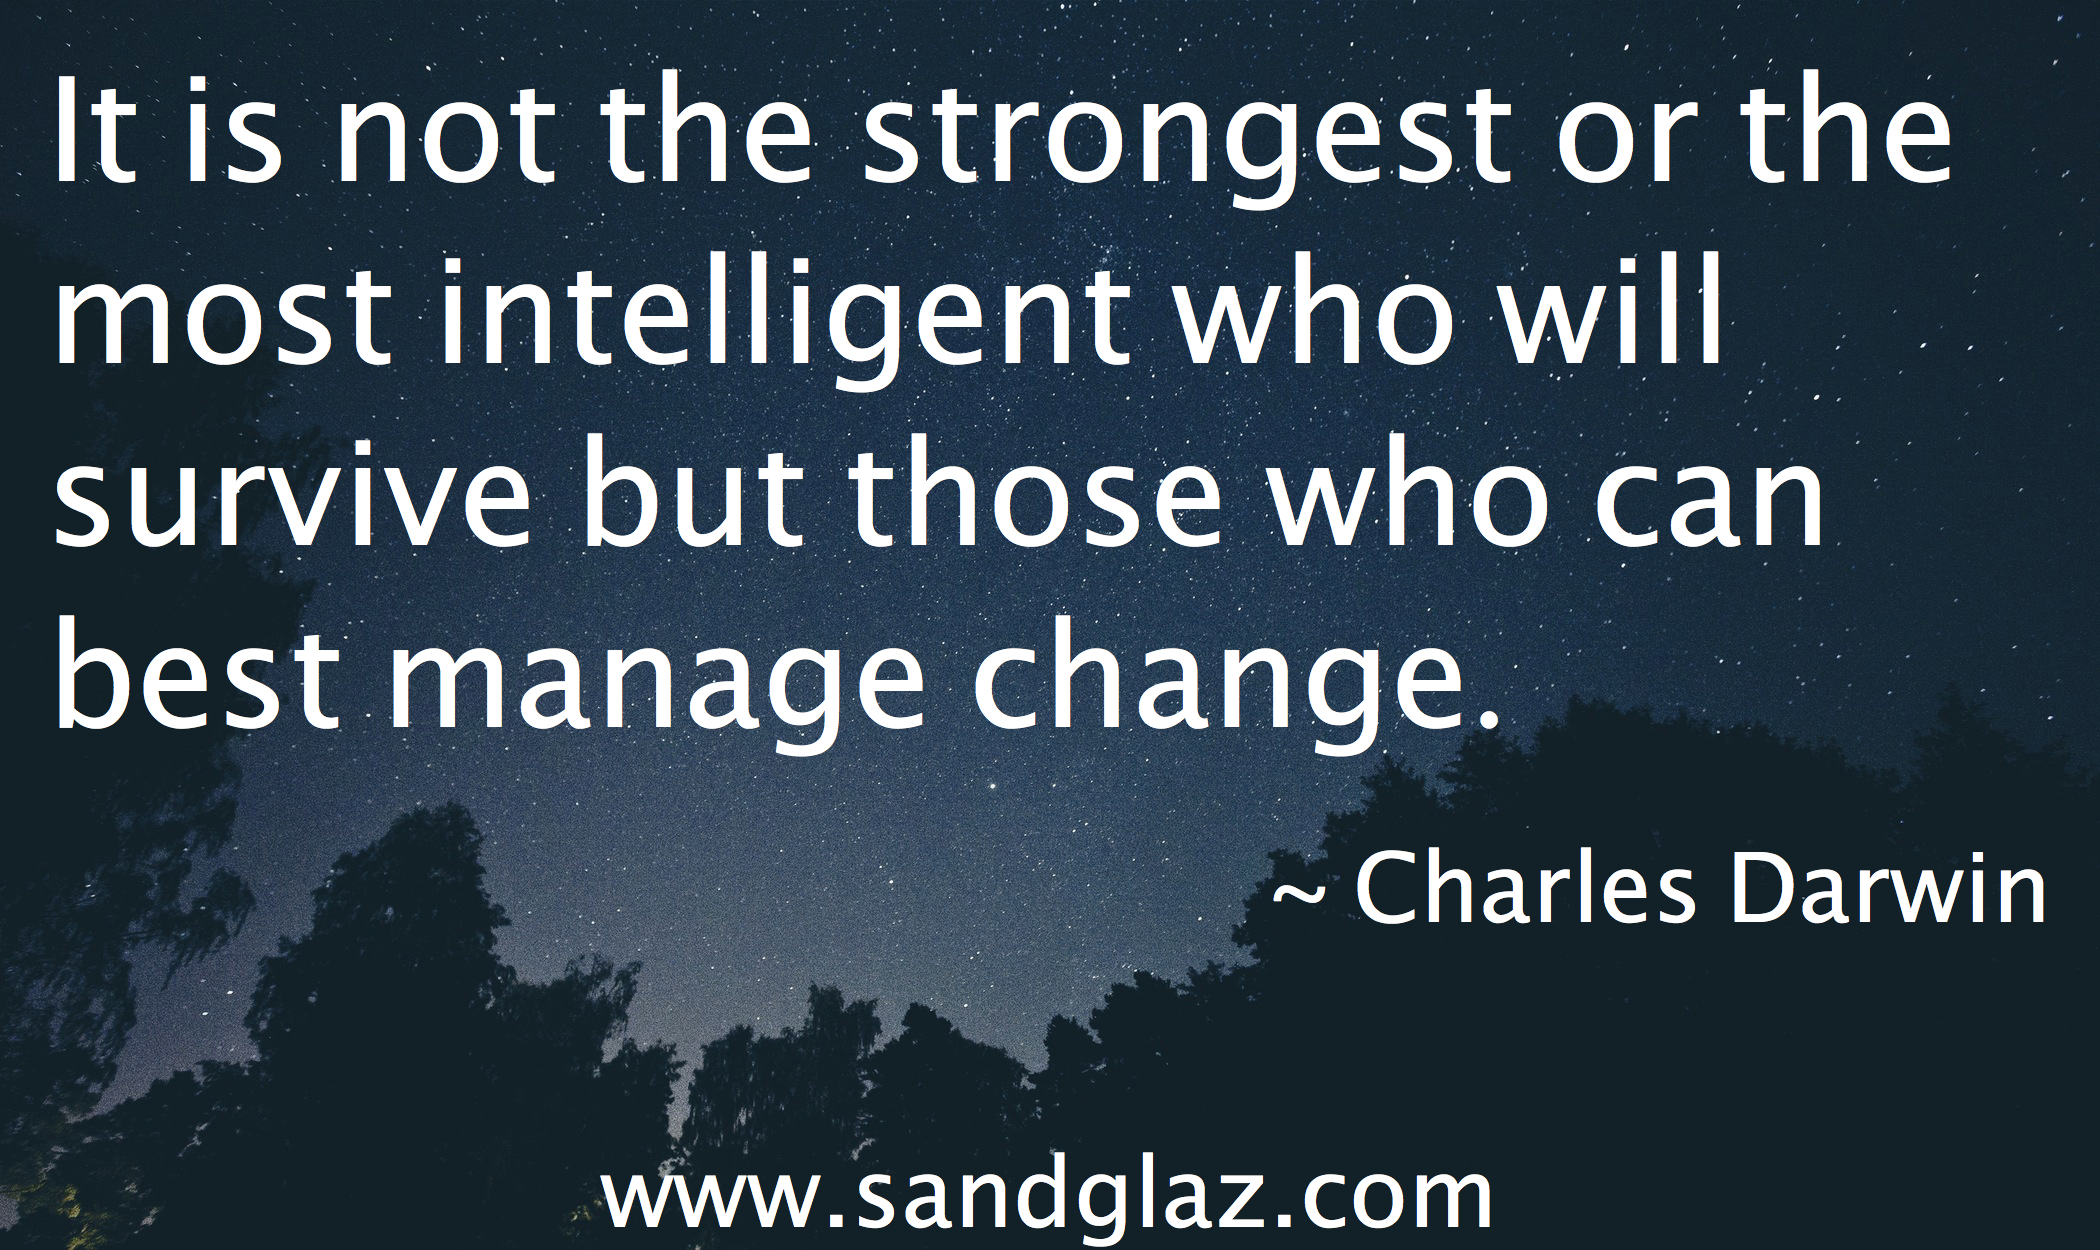 manage change